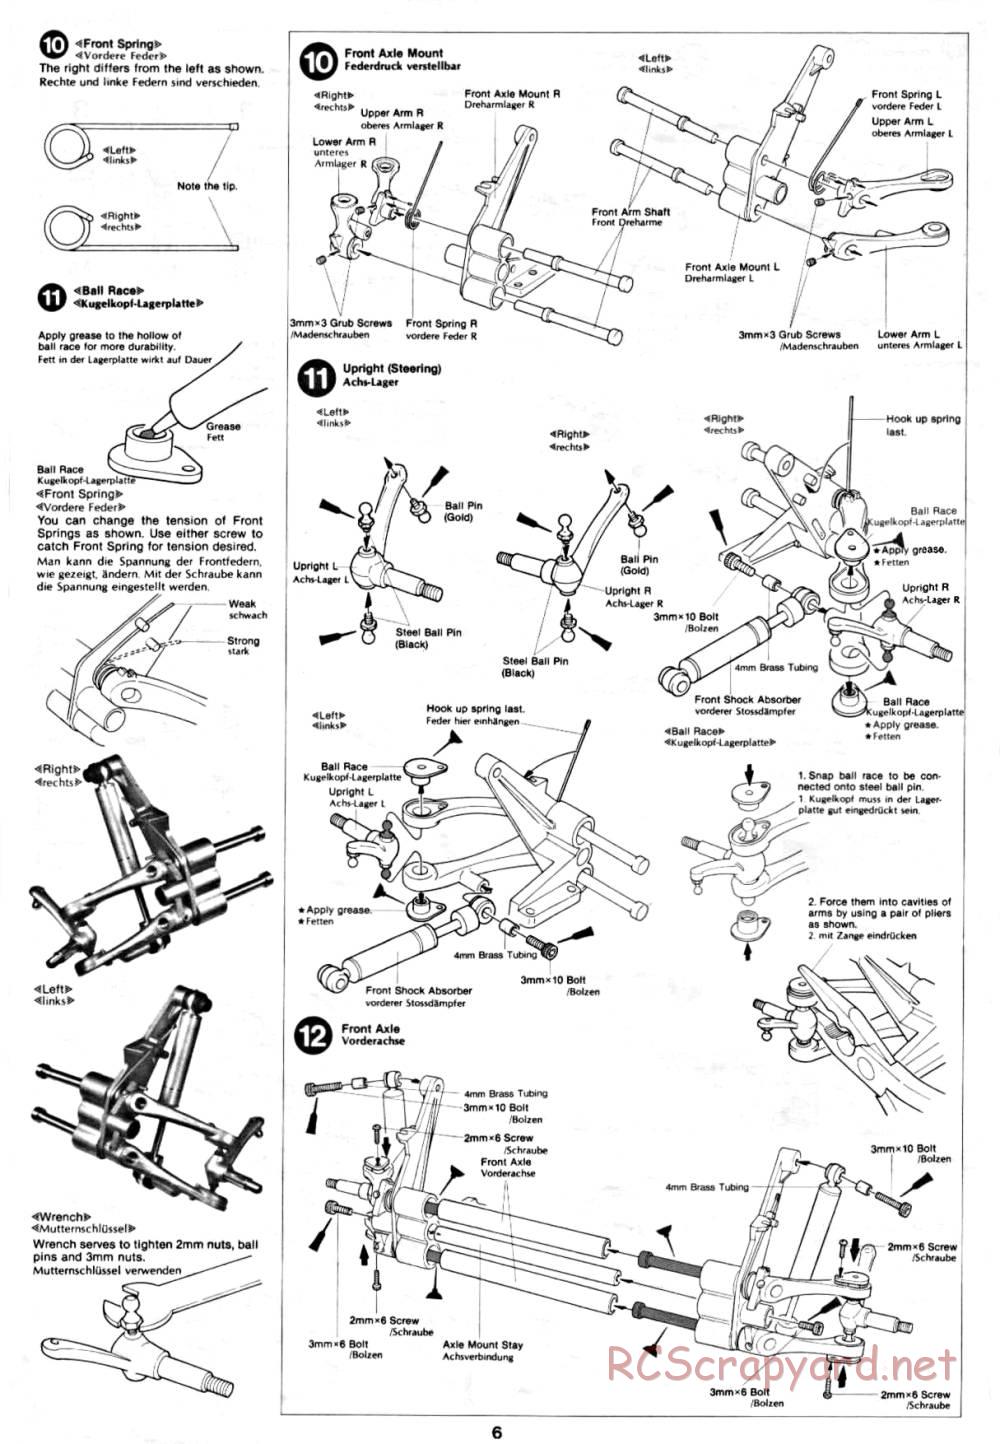 Tamiya - Ford F-150 Ranger XLT - 58027 - Manual - Page 6